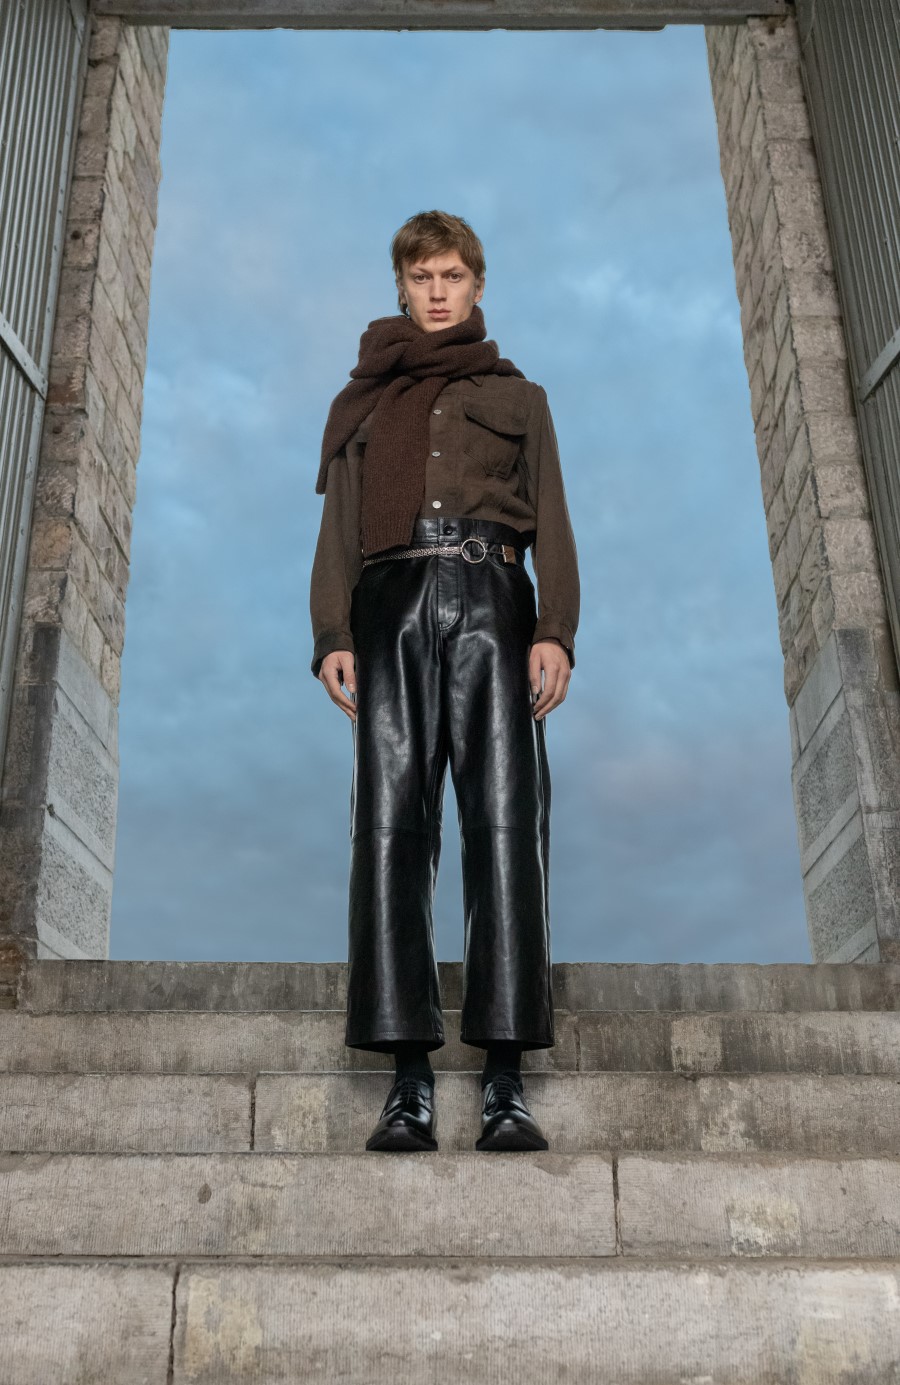 Dries Van Noten Fall Winter 2021 - Paris Fashion Week Men’s